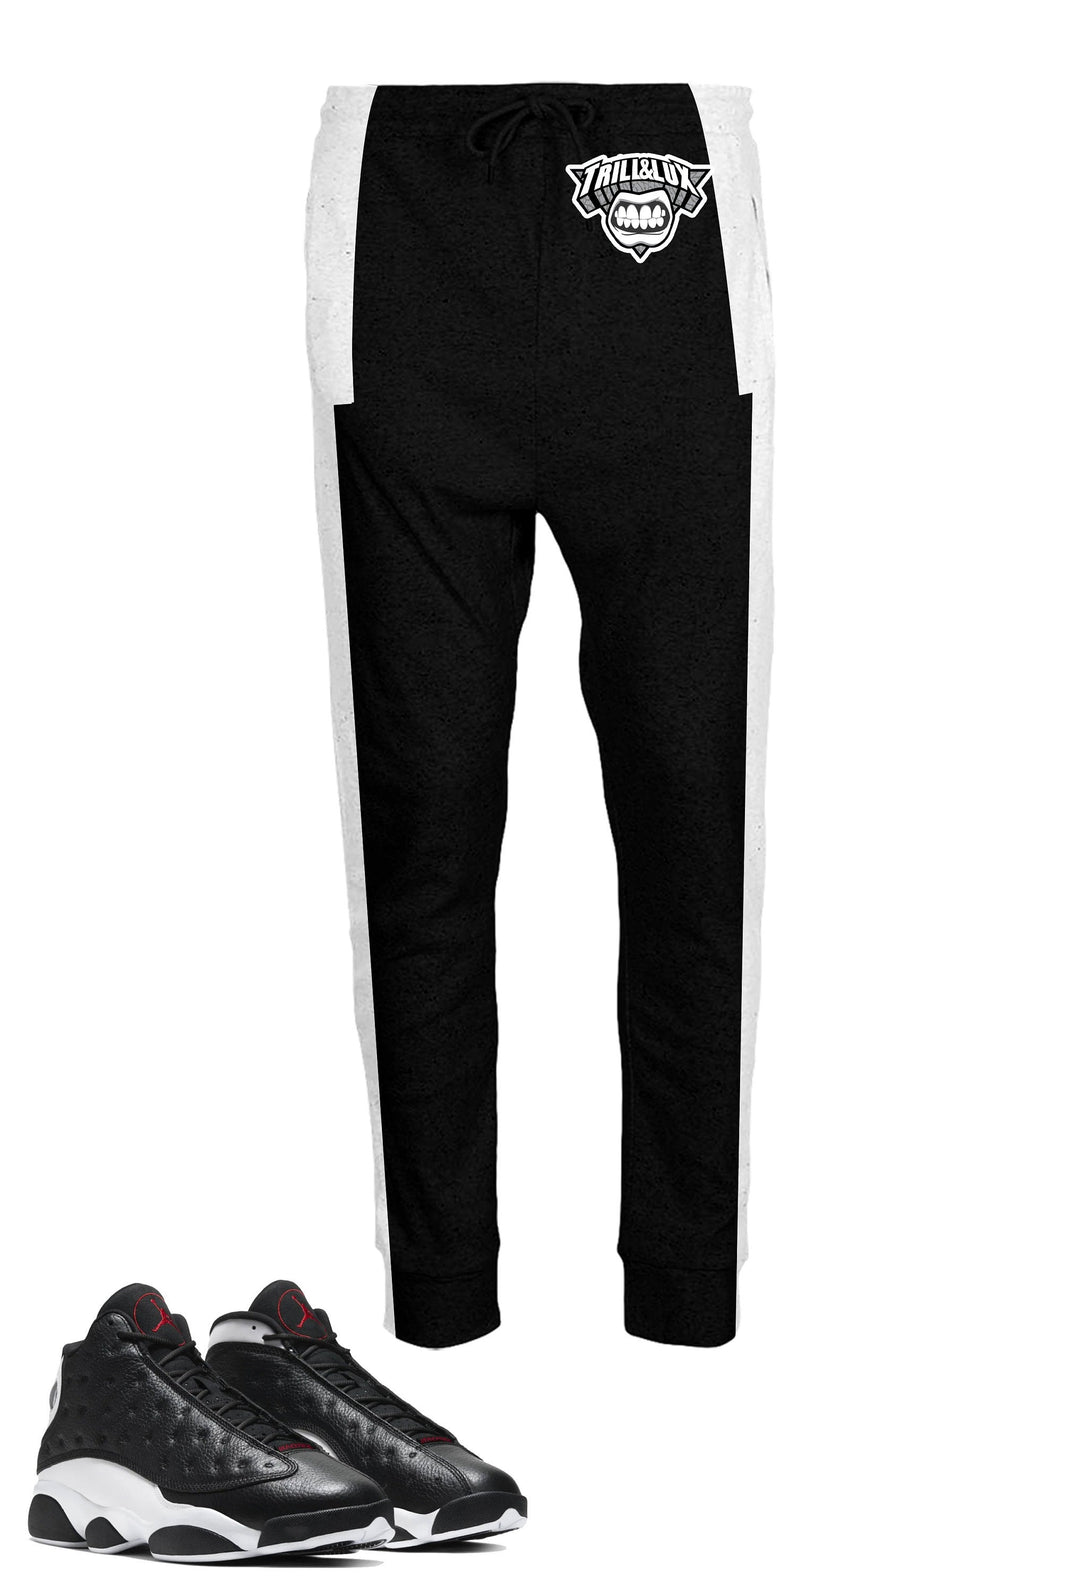 Trill Reverse He Got Game Jogging Suit | Retro Jordan 13 Colorblock  Jump Suit |